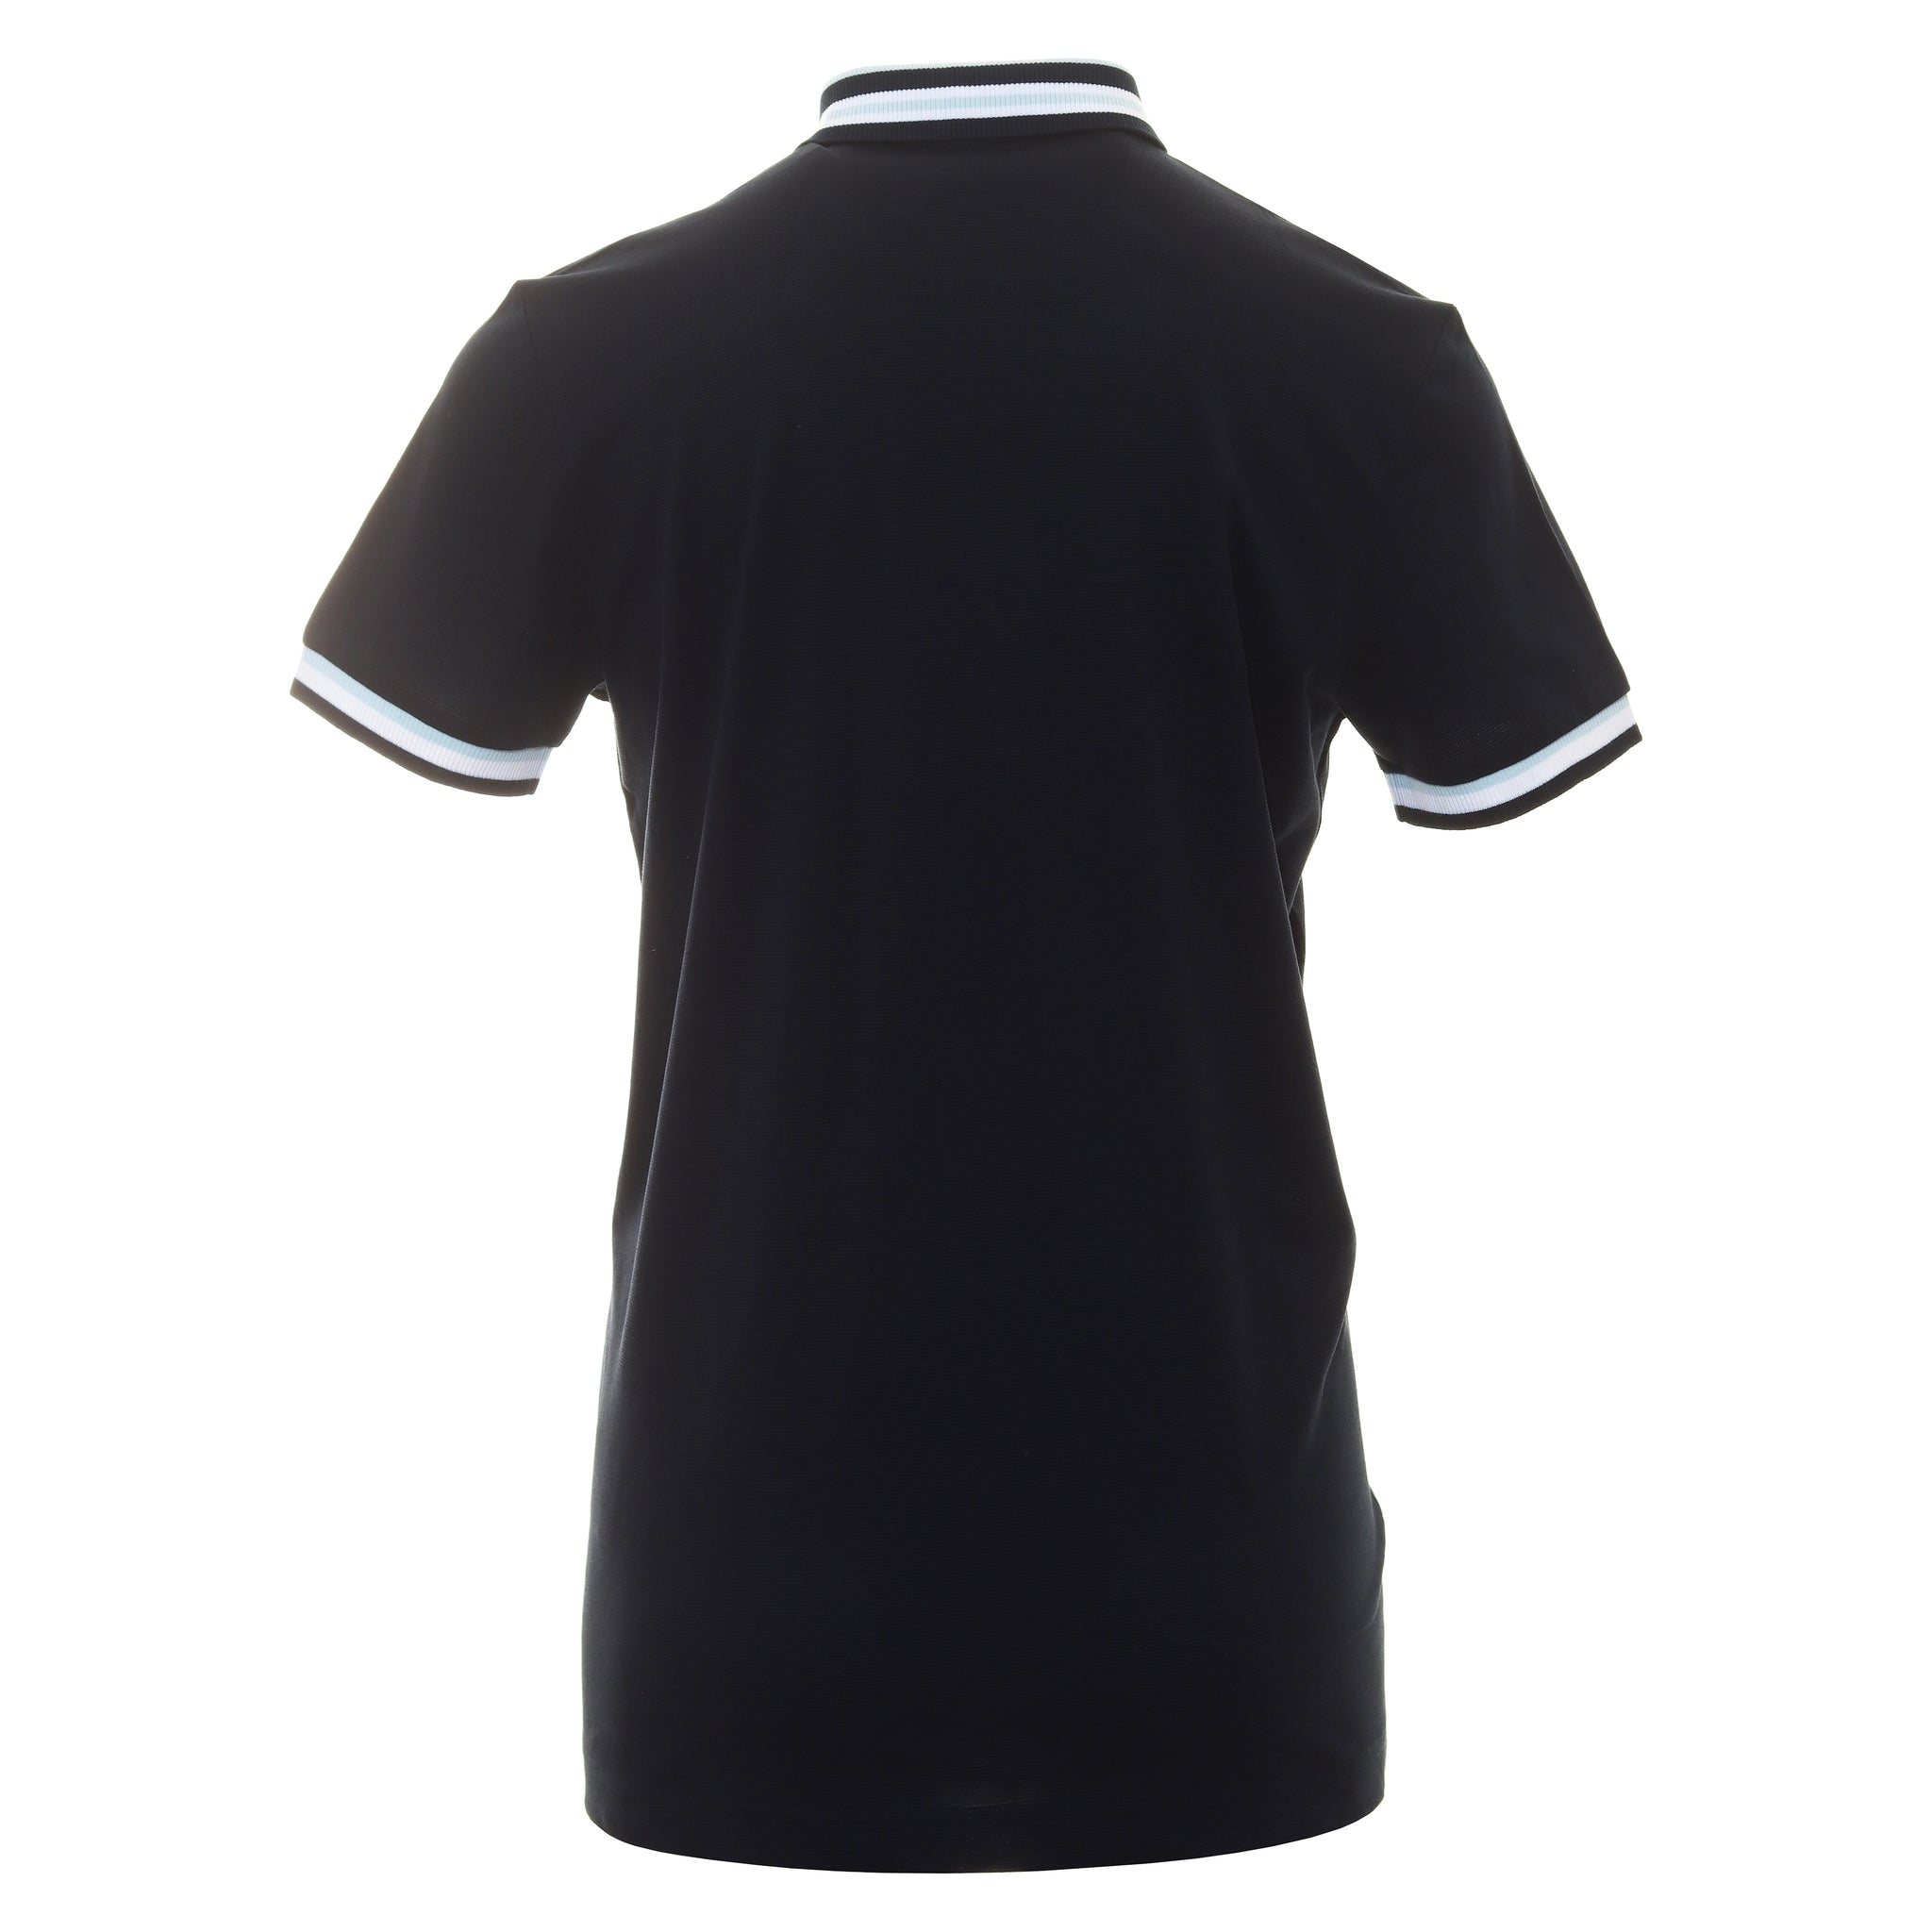 boss-paddy-2-polo-shirt-fa23-50494317-dark-blue-402-function18